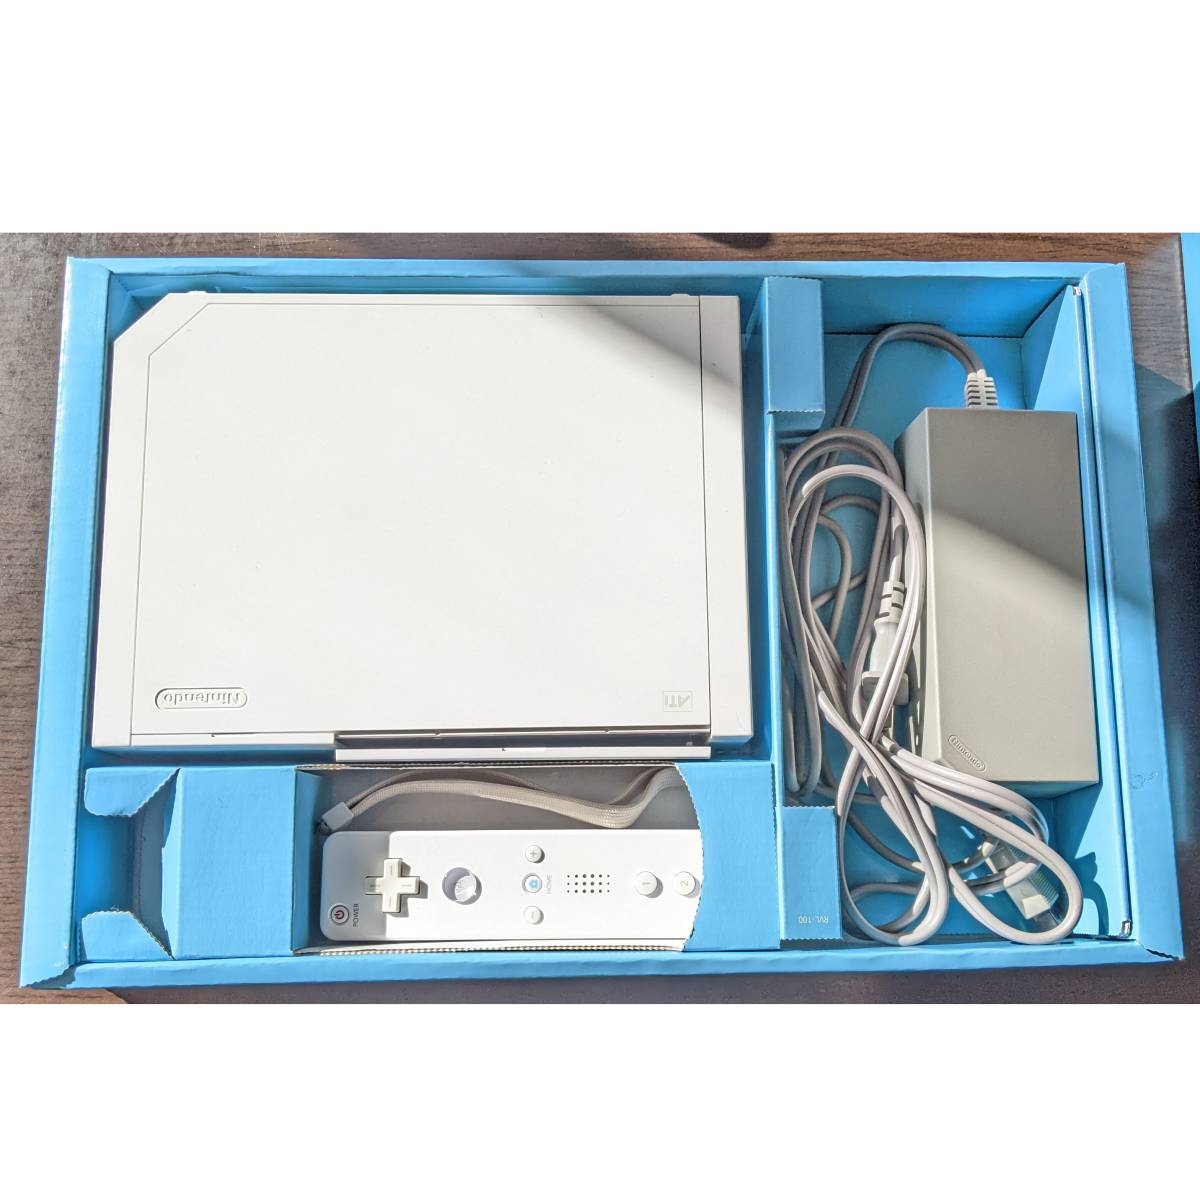 wii 本体 shiro (RLV-001) ゲーム機本体 箱・説明書付き 初期化動作確認済み 白色 ホワイト Wiiリモコン センサーバー